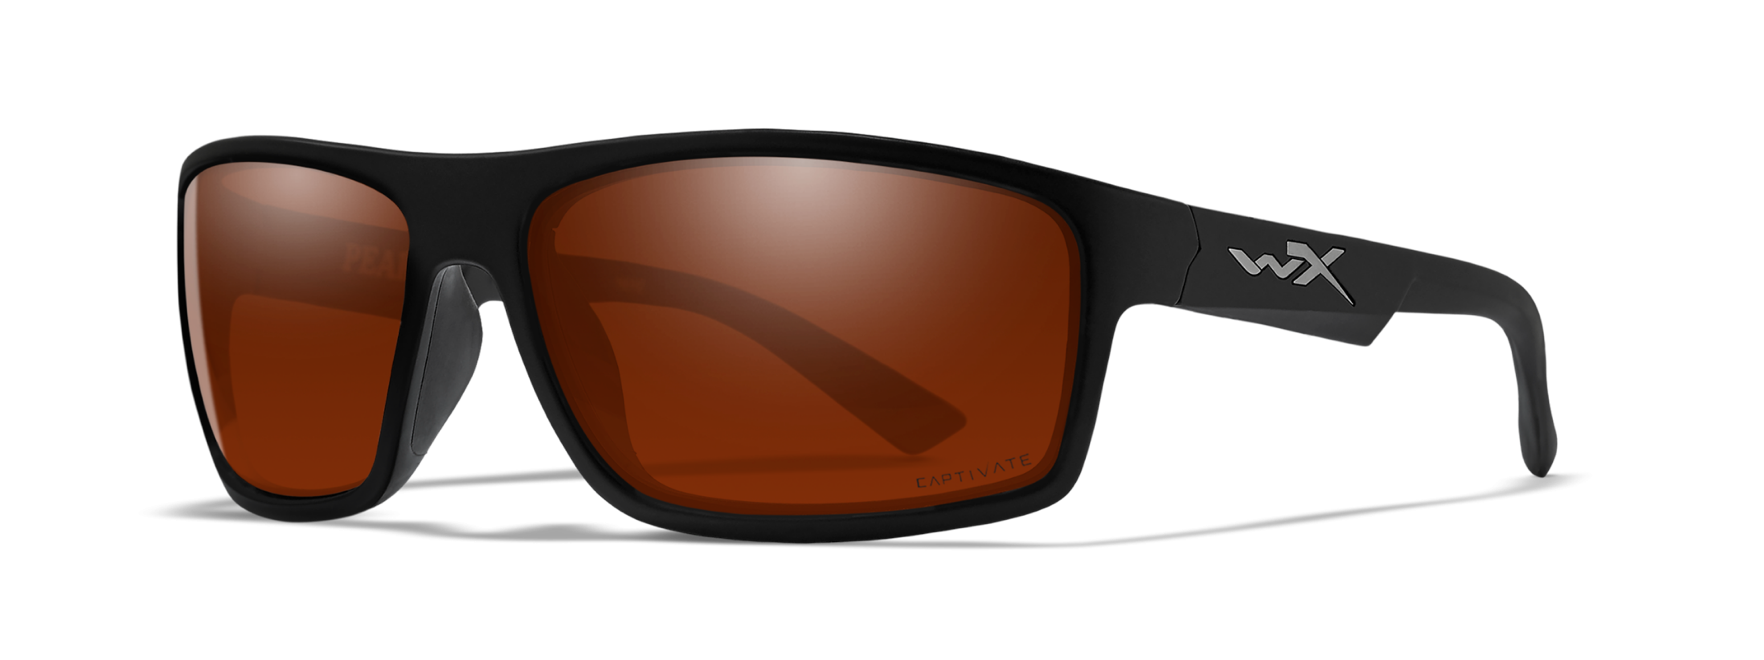 wiley x peak sunglasses with captivate polarized copper lenses in matte black frame